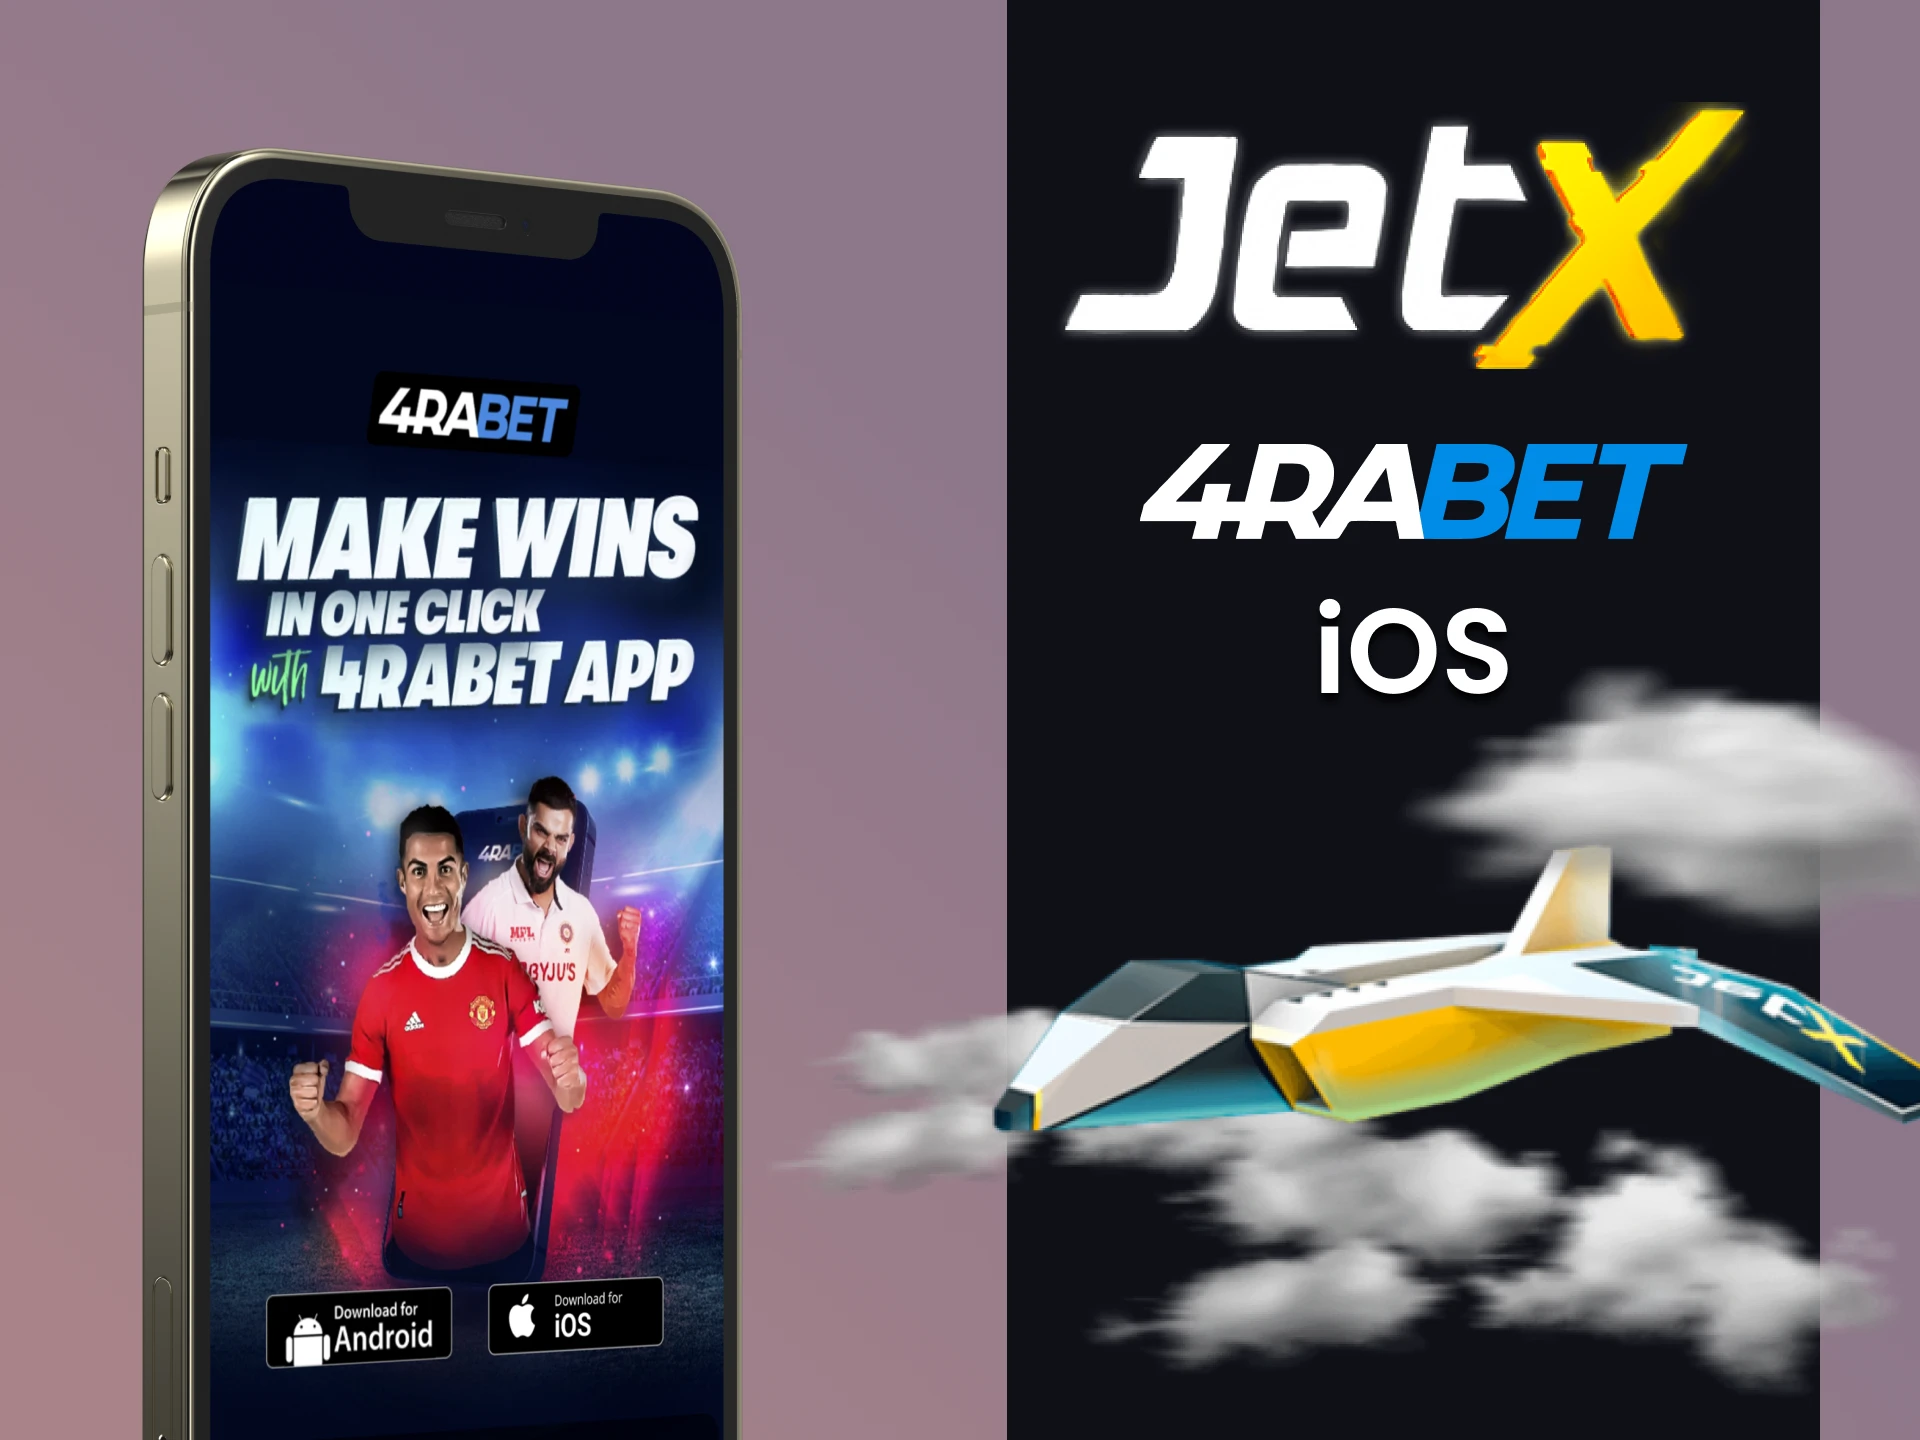 Install the 4rabet app on iOS to play JetX.